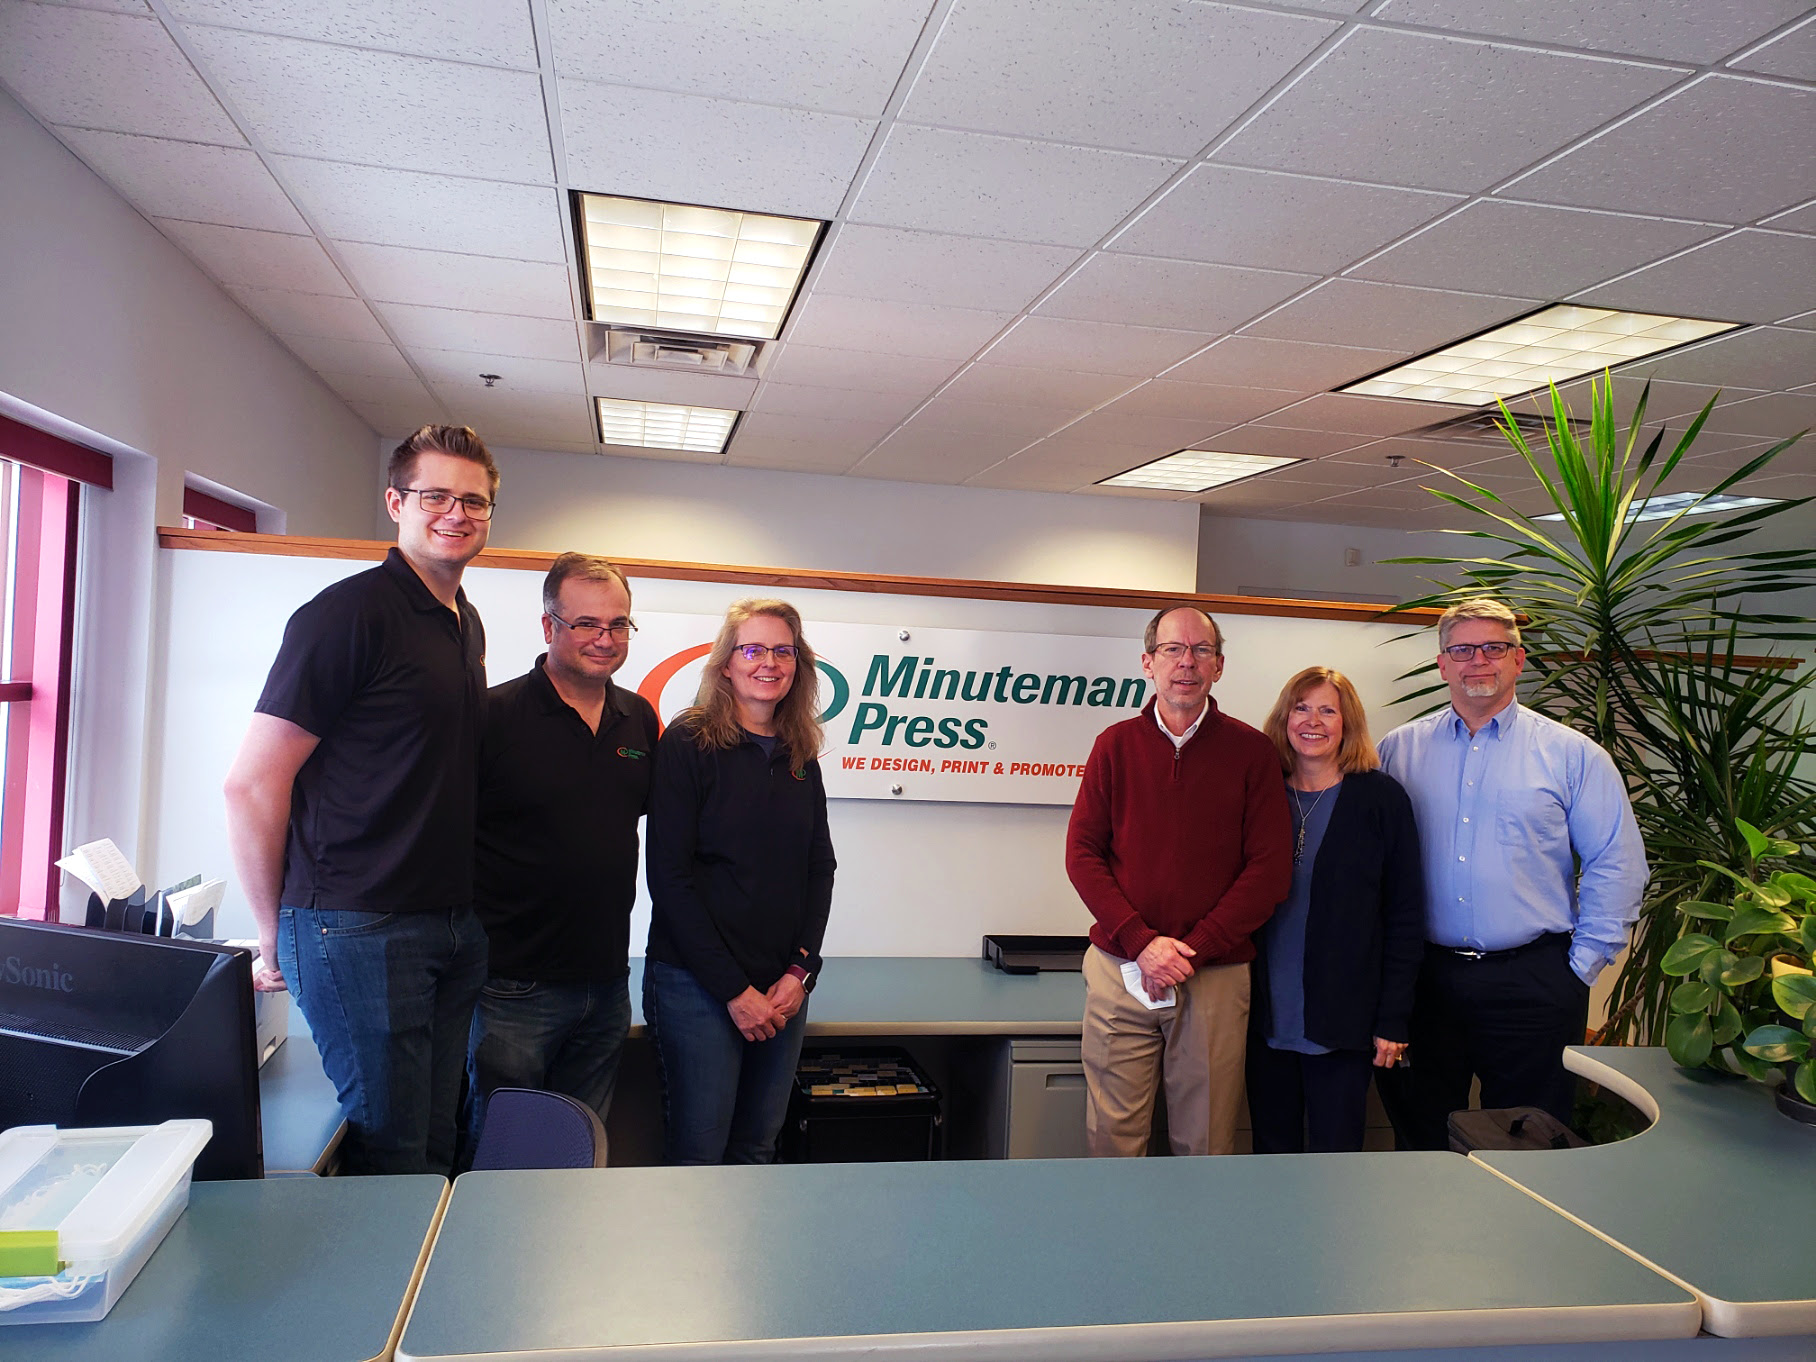 SprintPrint is now Minuteman Press, Madison, WI. Pictured left to right: CJ Kenney, Chrispin Kenney, Lynn Kenney, Phil Van Kampen, Liz Van Kampen, and Chris Malchow.